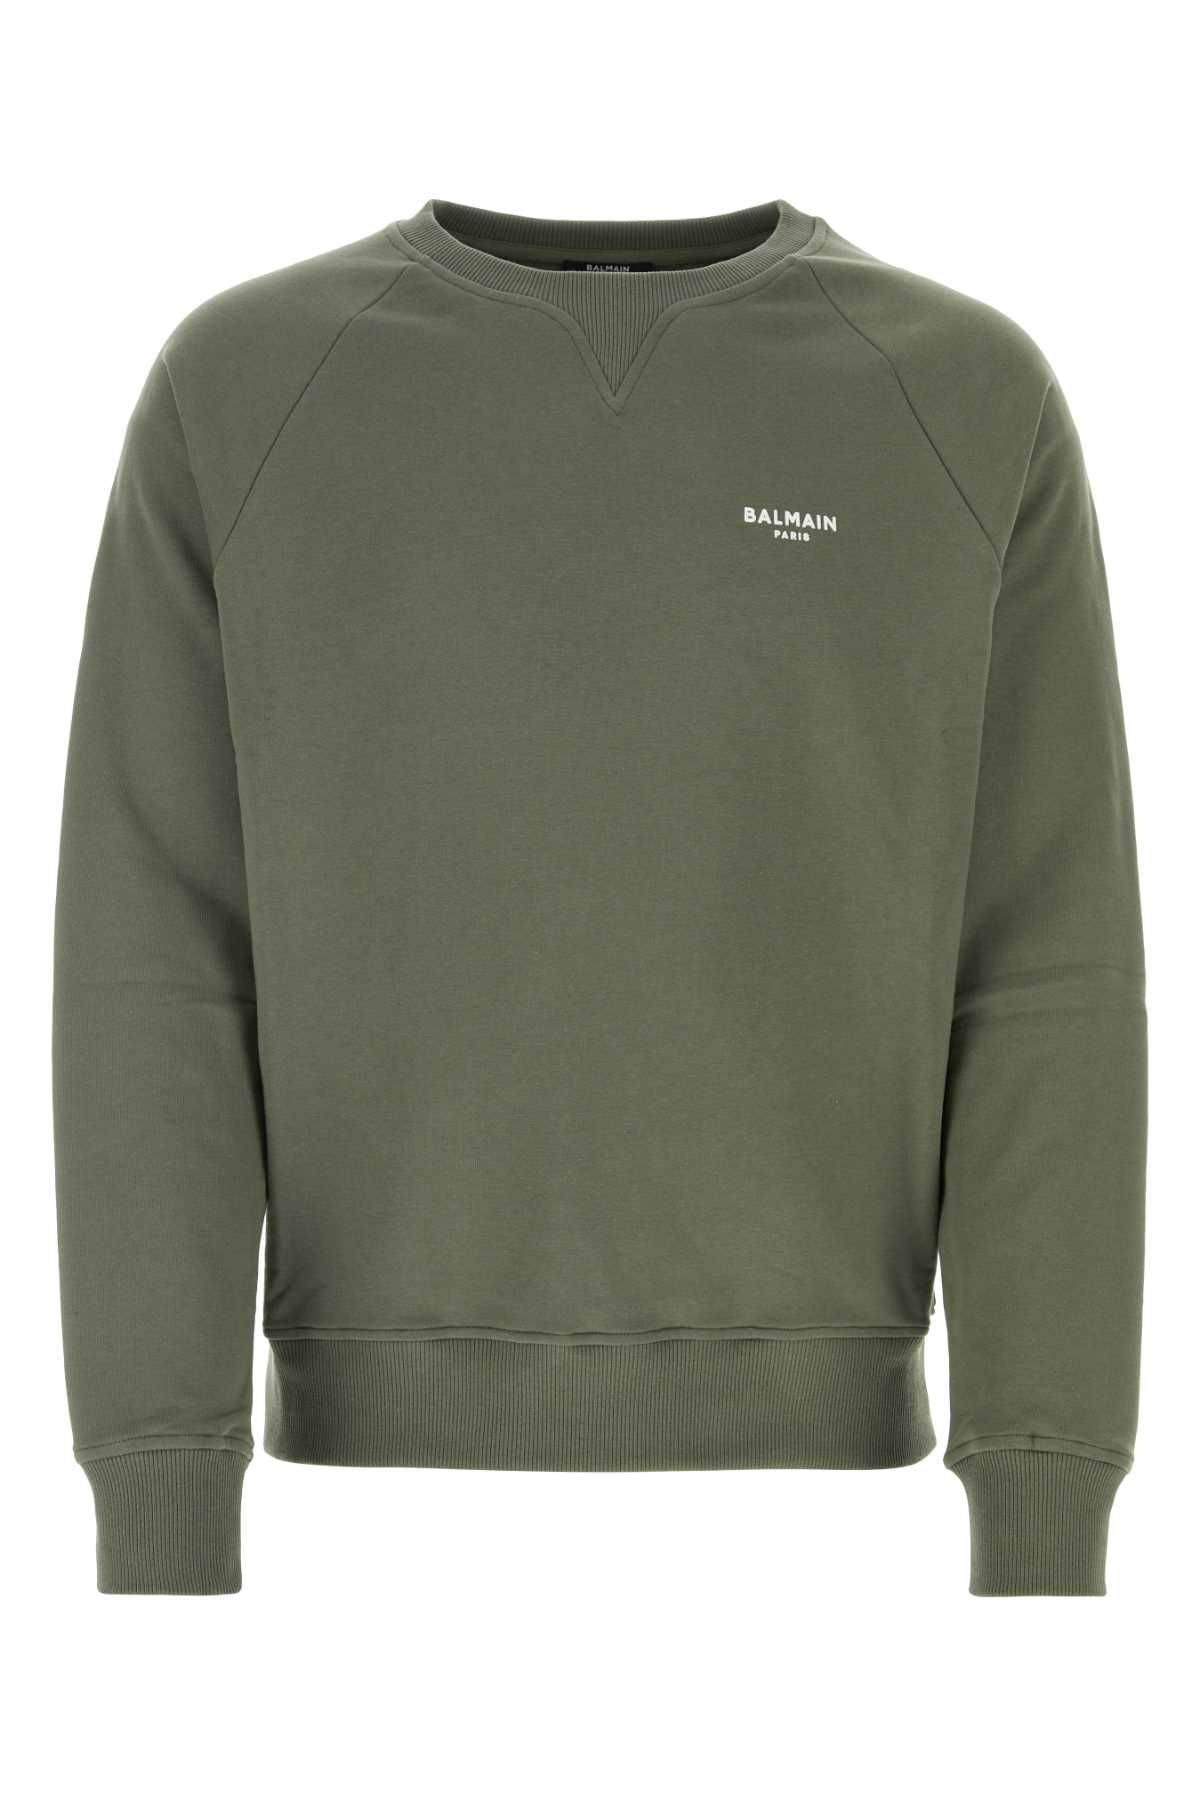 Balmain Army Green Cotton Sweatshirt In Kakiclairnaturel